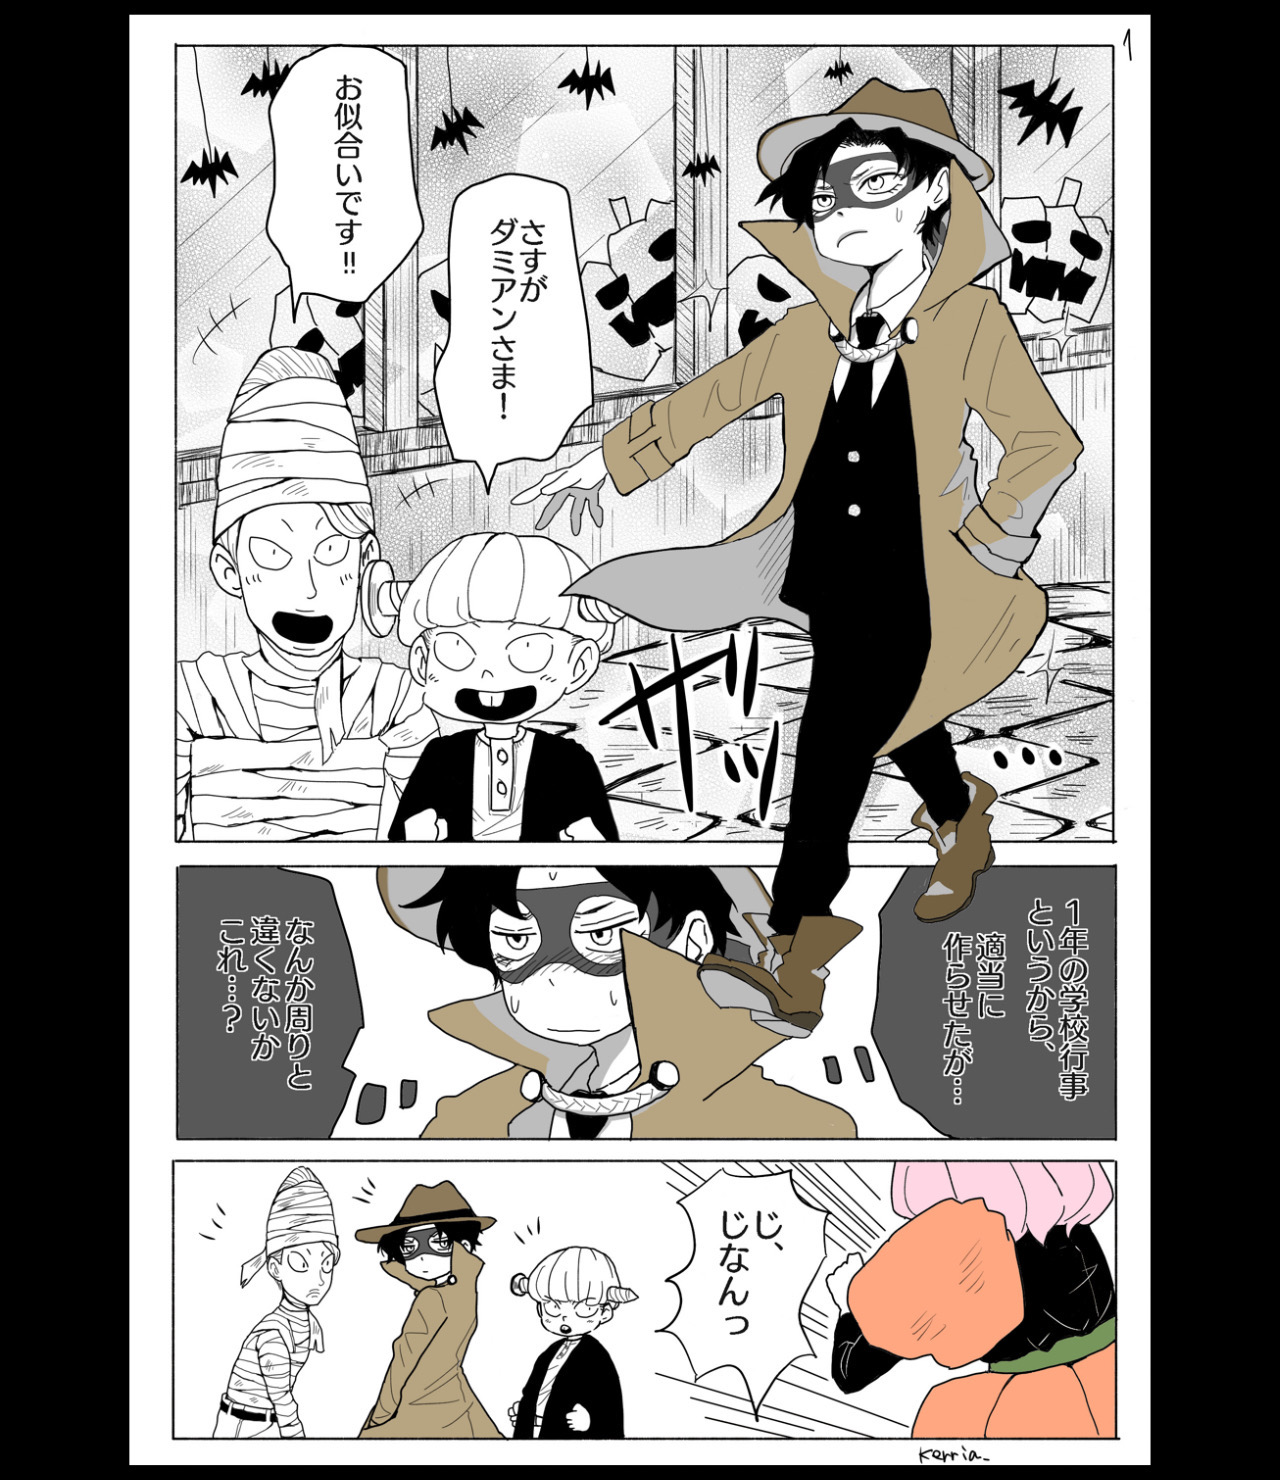 Spy x Family — trick or treat!! (doujinshi) - MangaDex